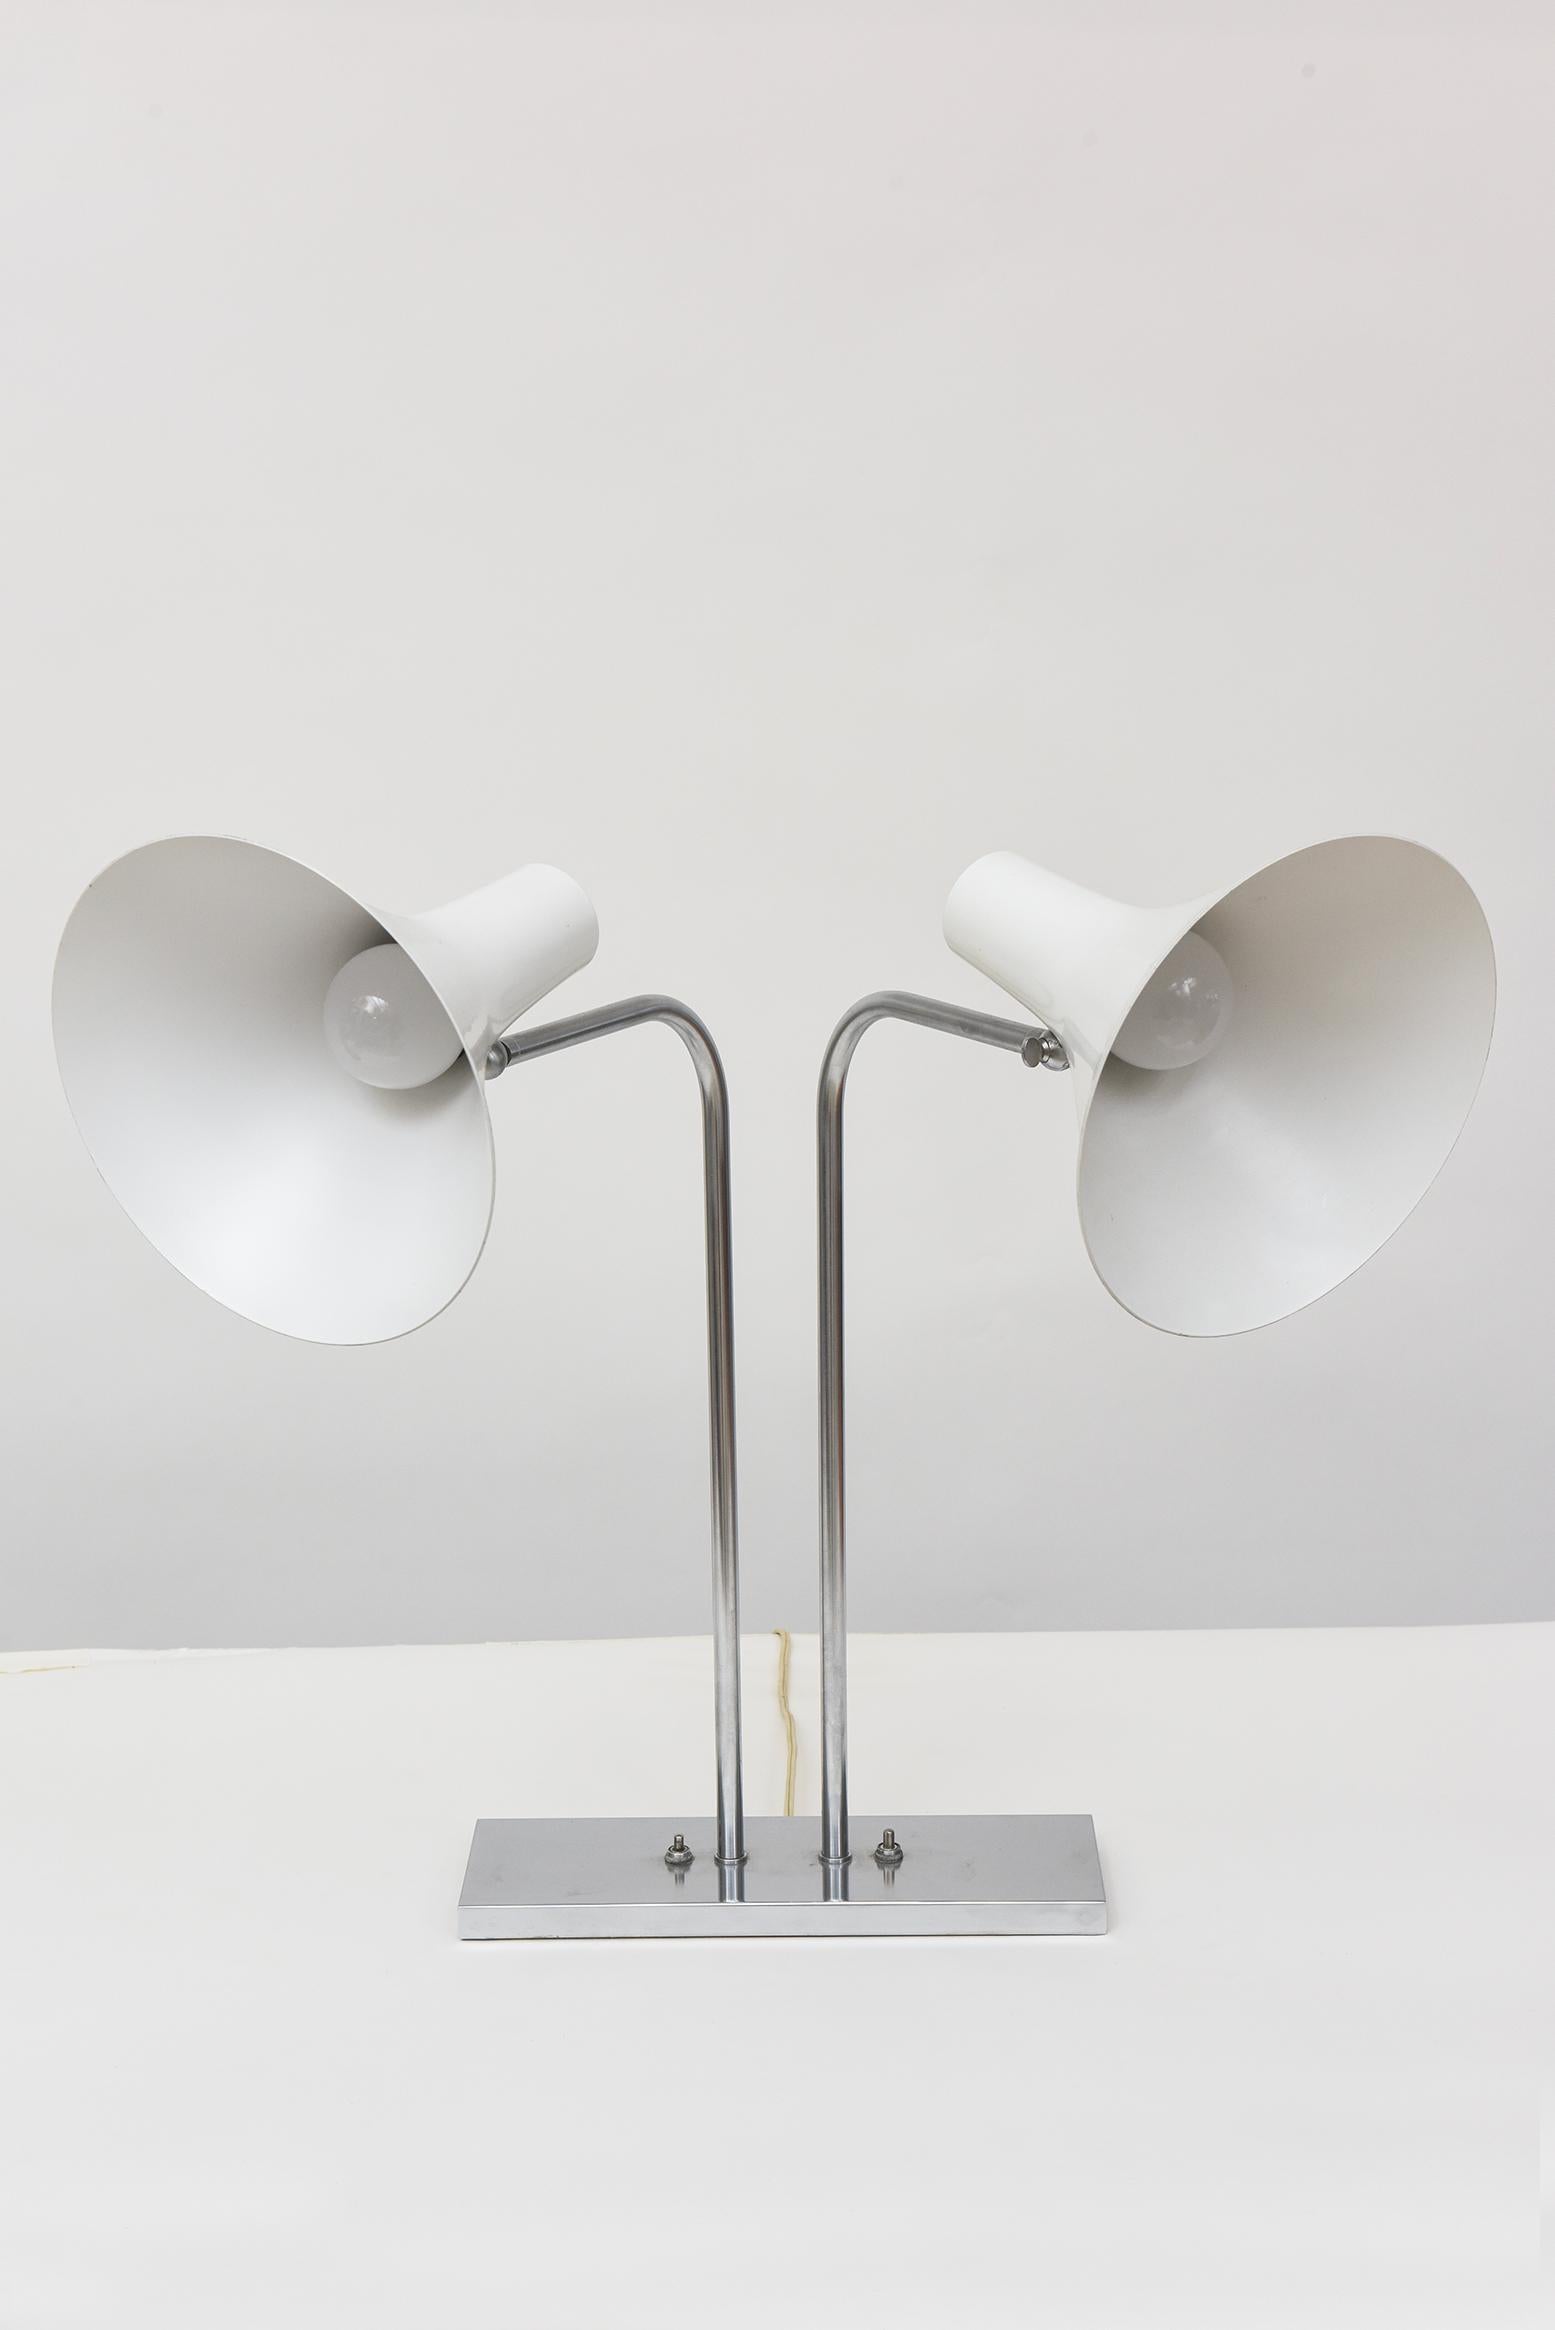 American 1960s Double Desk Lamp by Greta Von Nessen for Nessen Studio